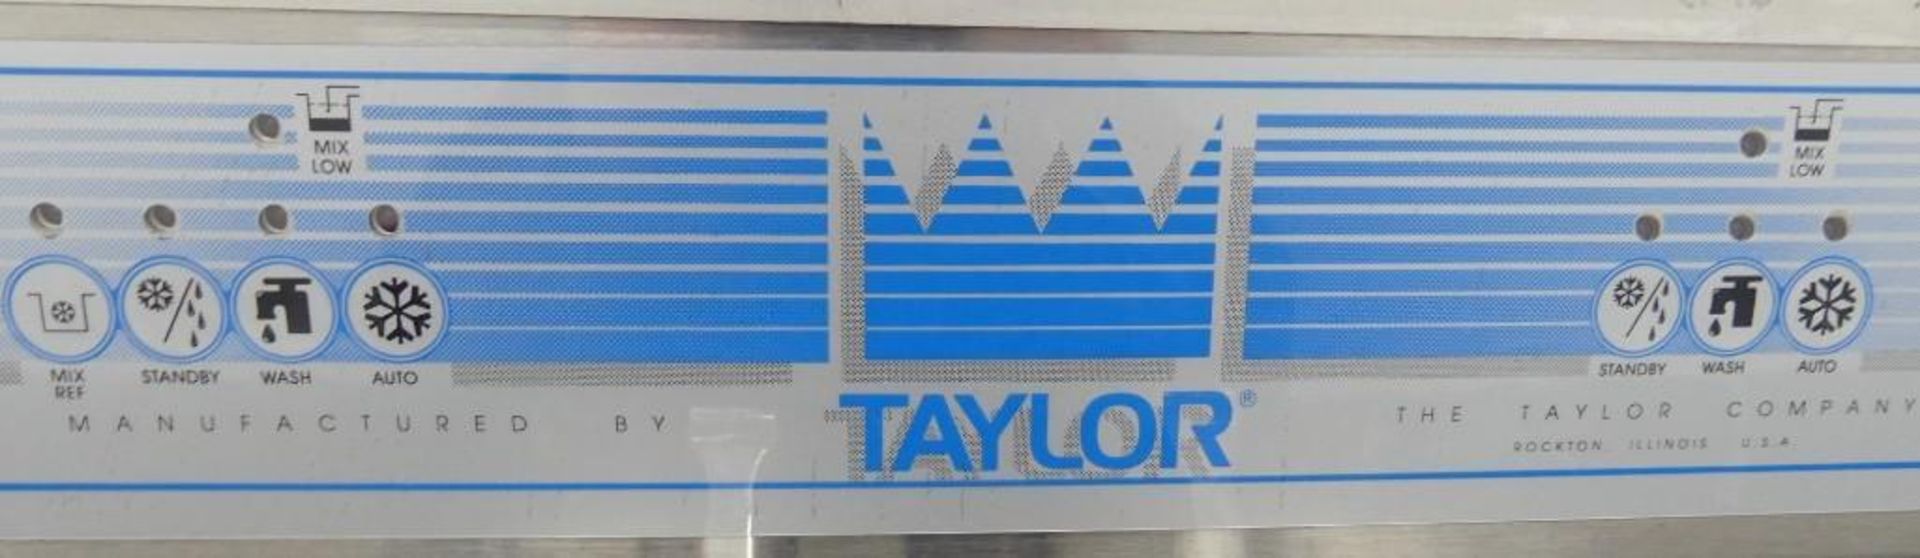 Taylor 794-33 Water Cooled Twin Twist Soft Serve Ice Cream/ Frozen Yogurt Machine - Image 15 of 19